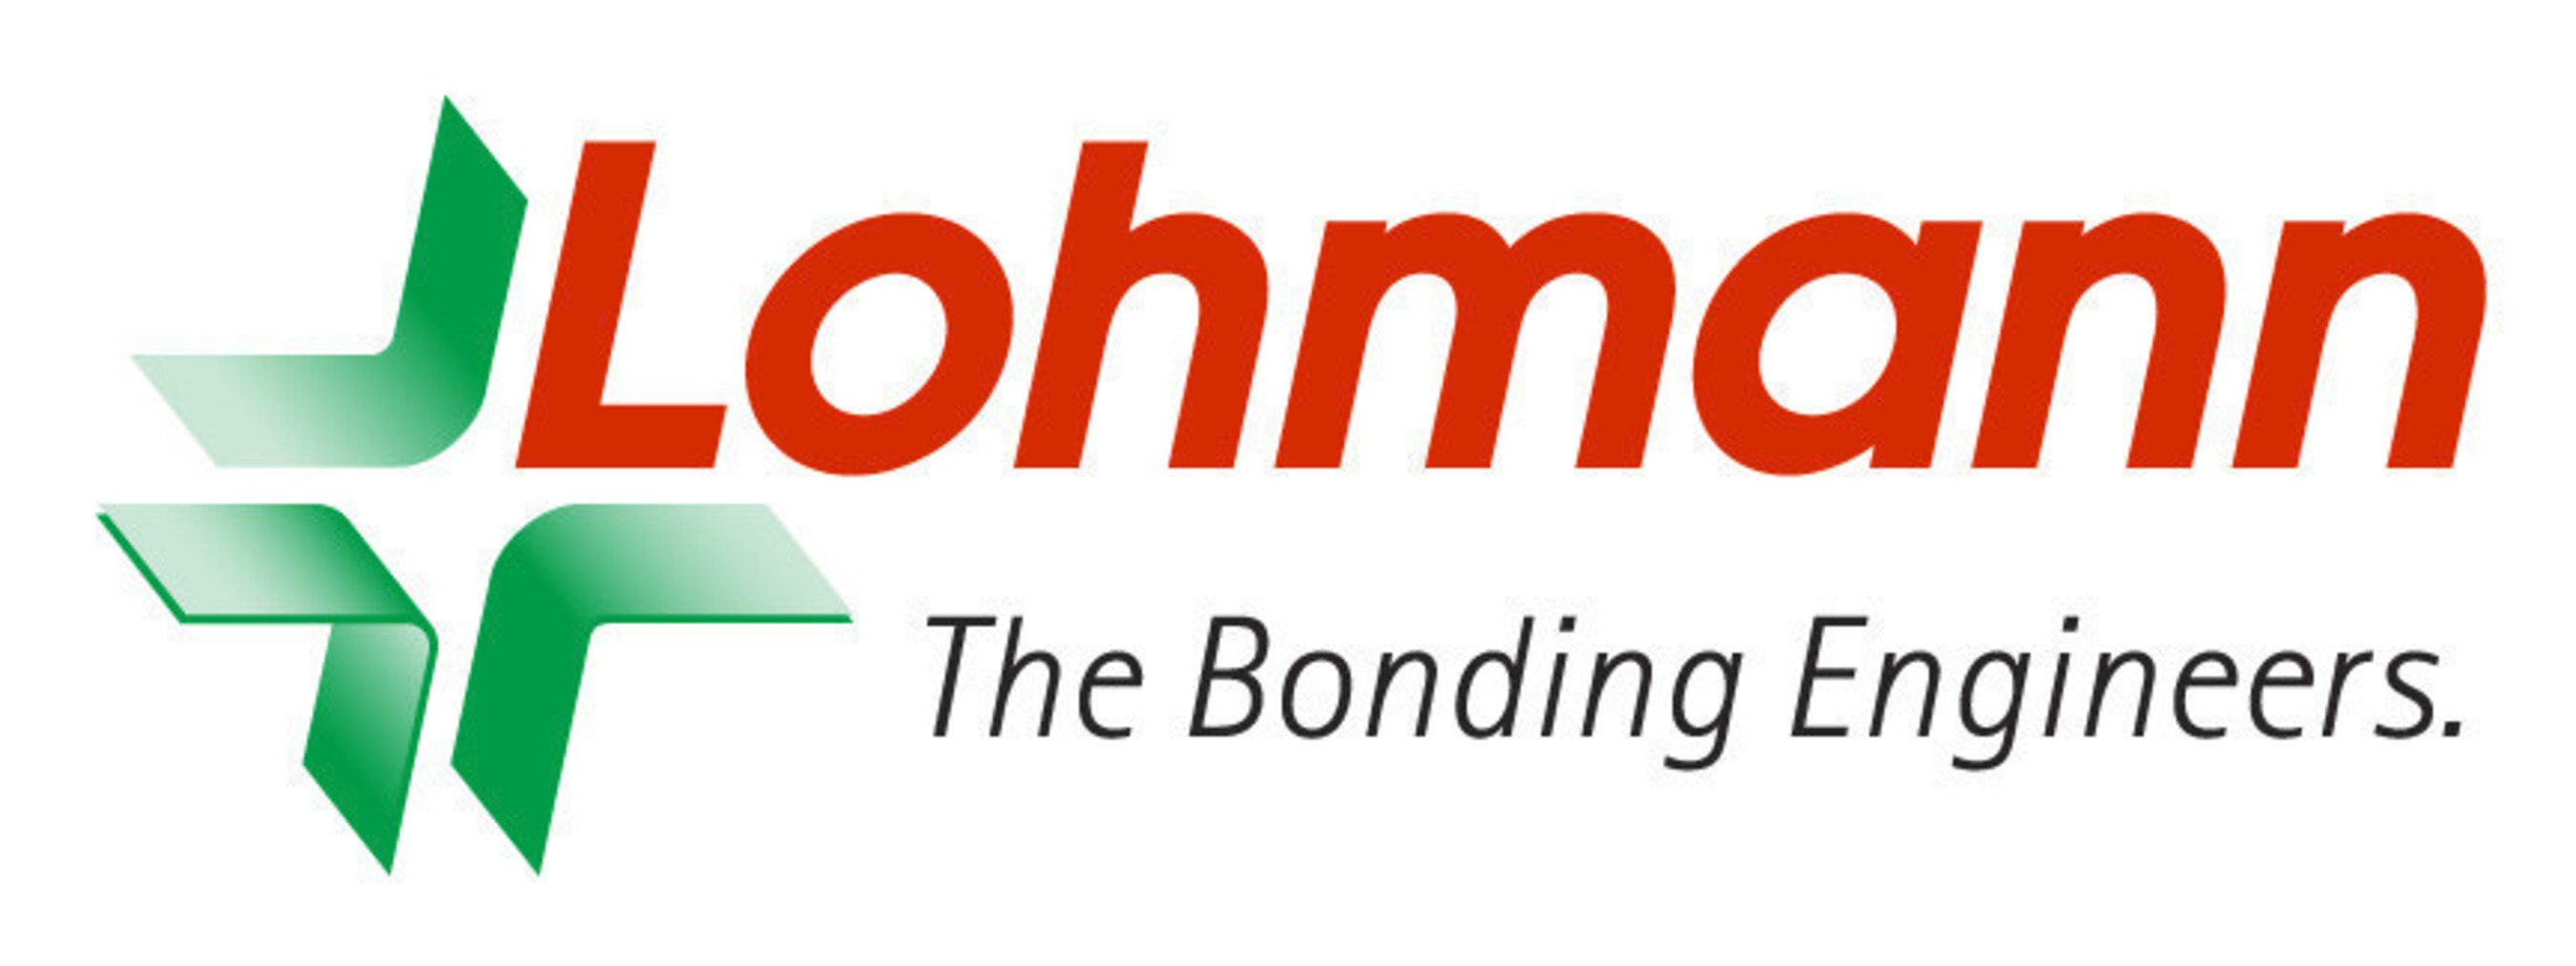 Lohmann, The Bonding Engineers logo